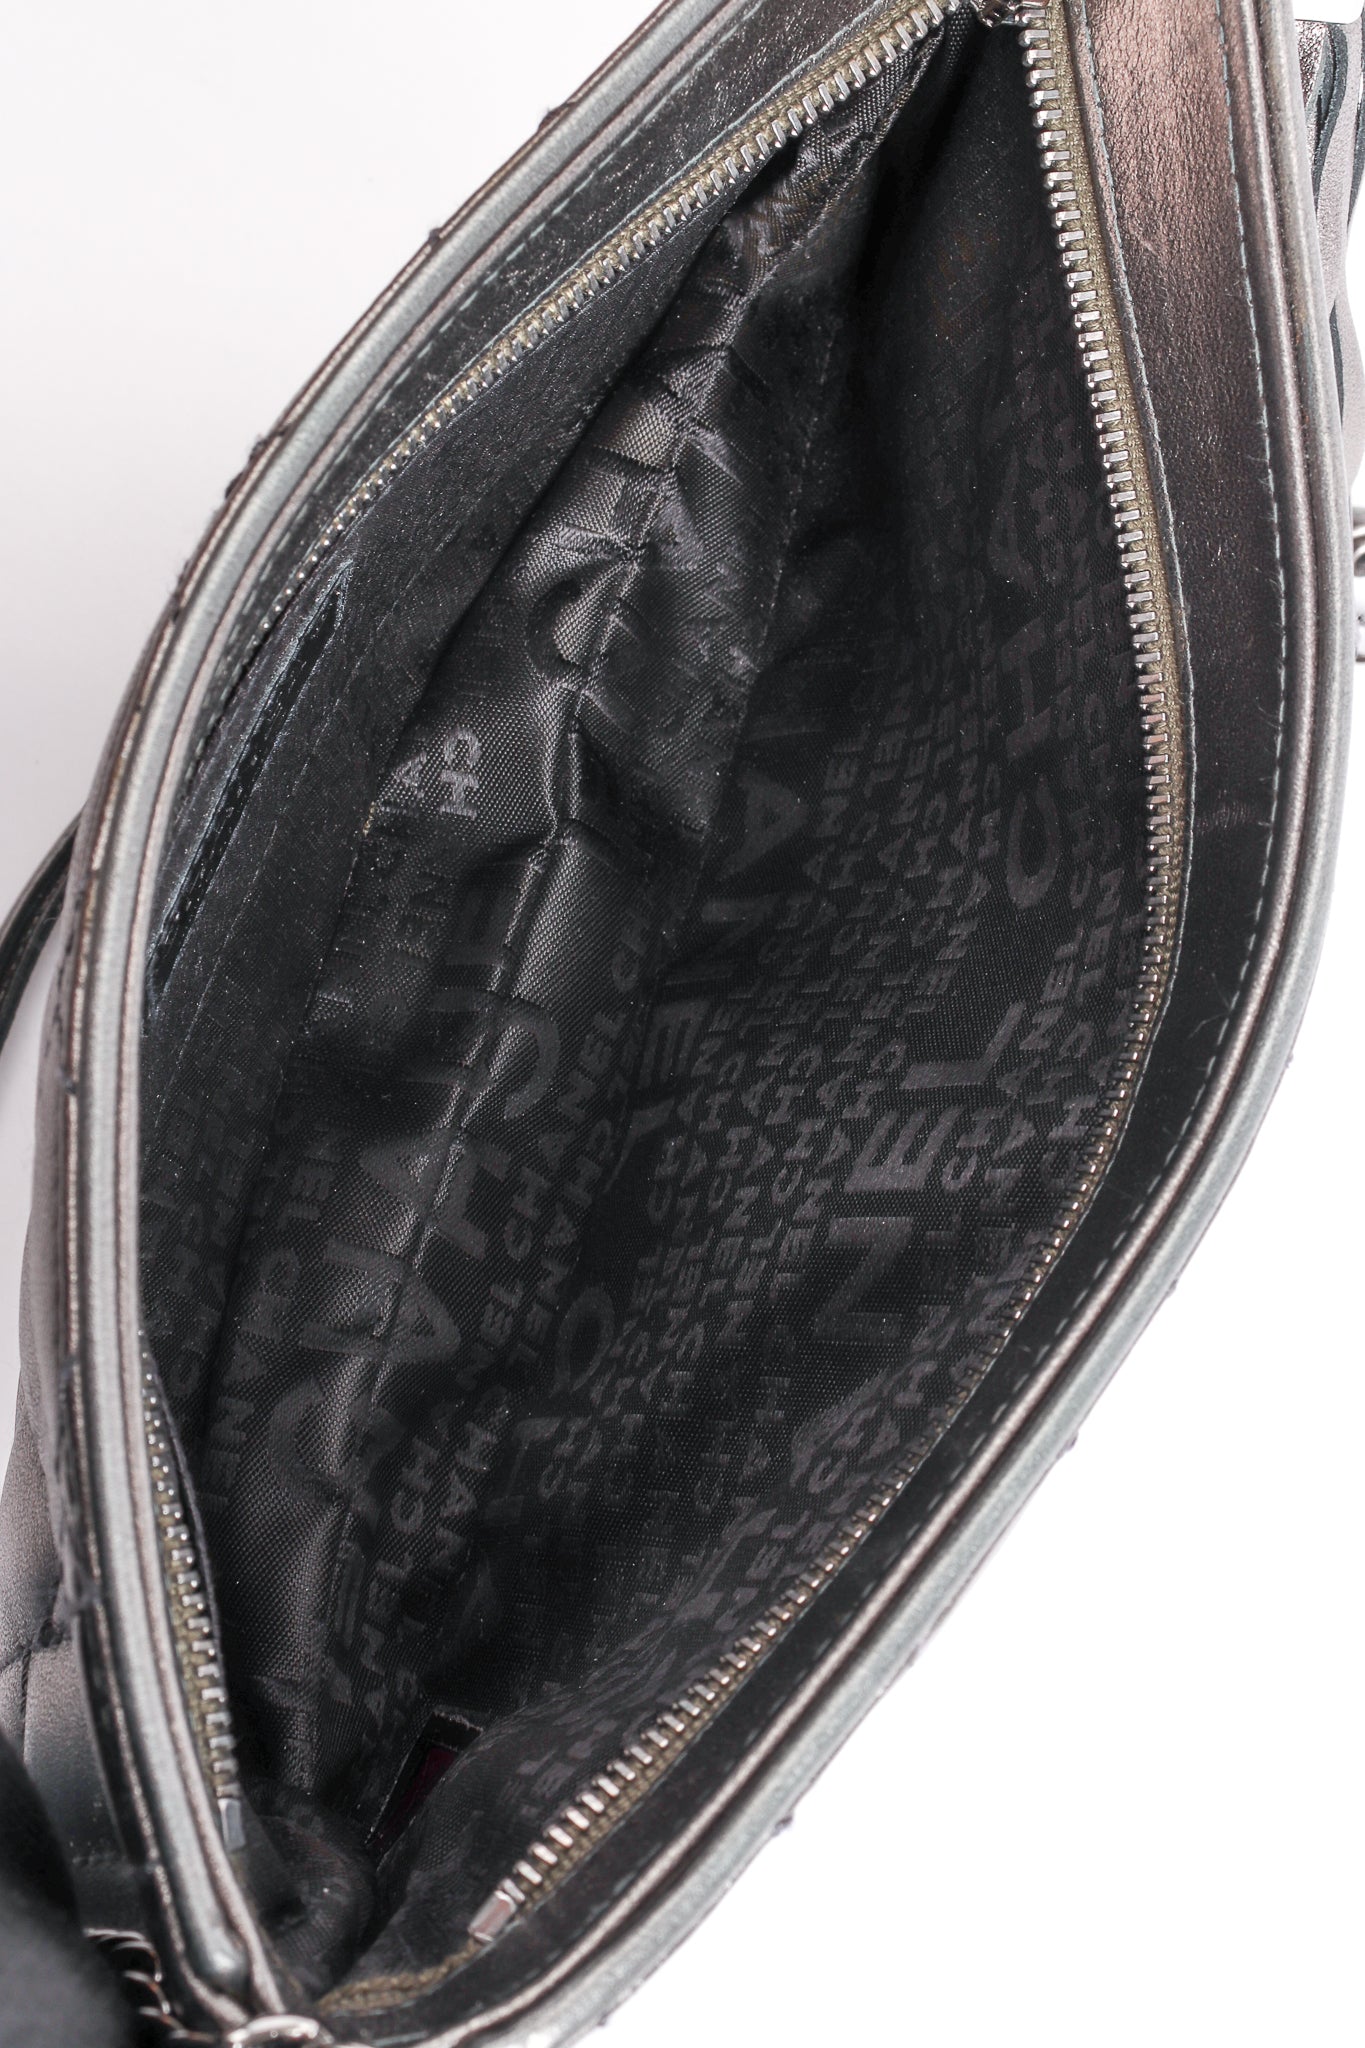 Vintage Chanel 2004 Metallic Quilted Tassel Shoulder Bag lining at Recess Los Angeles